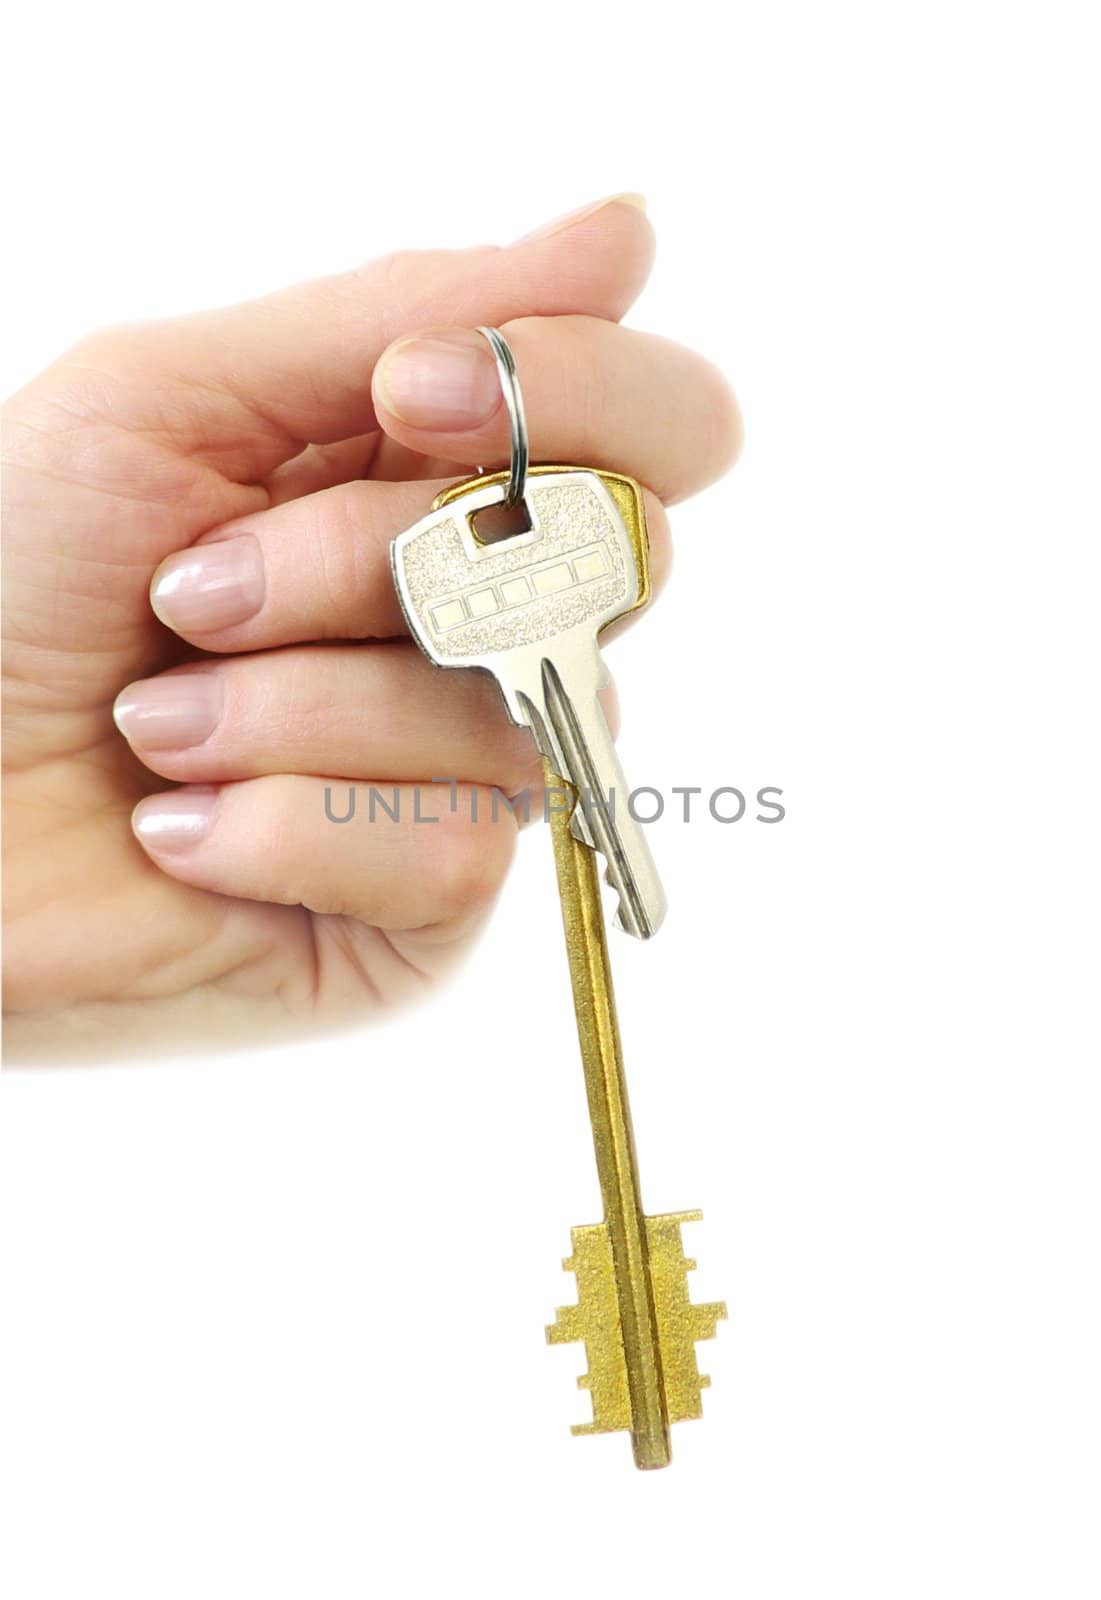  bunch of keys hangs on finger of woman hand